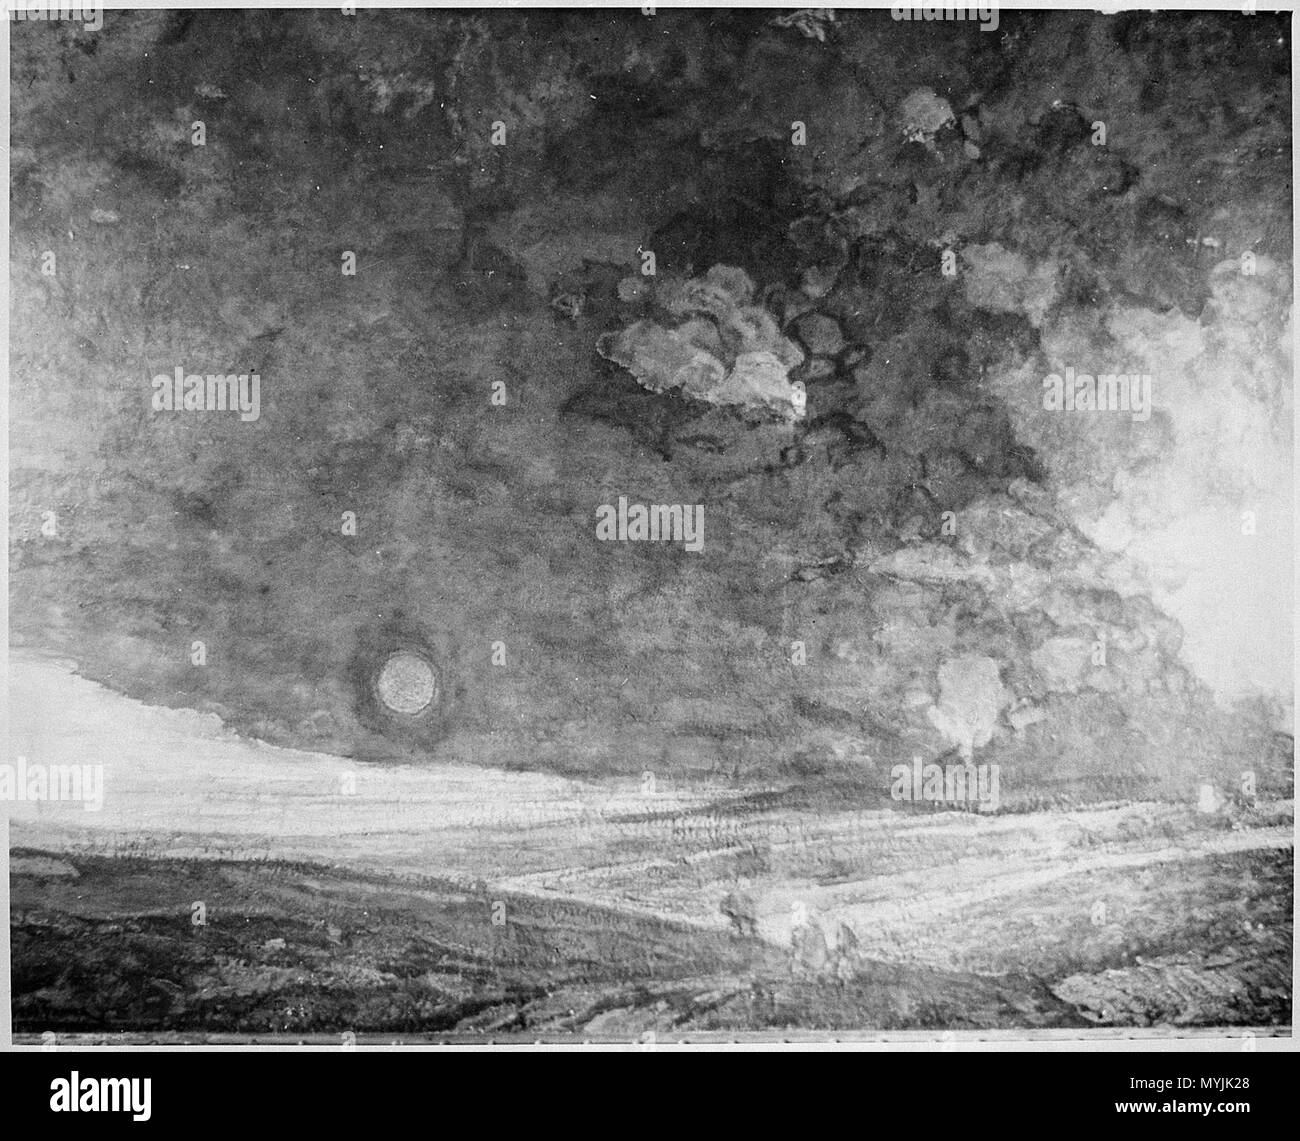 Sodom gomorrah Black and White Stock Photos & Images - Alamy